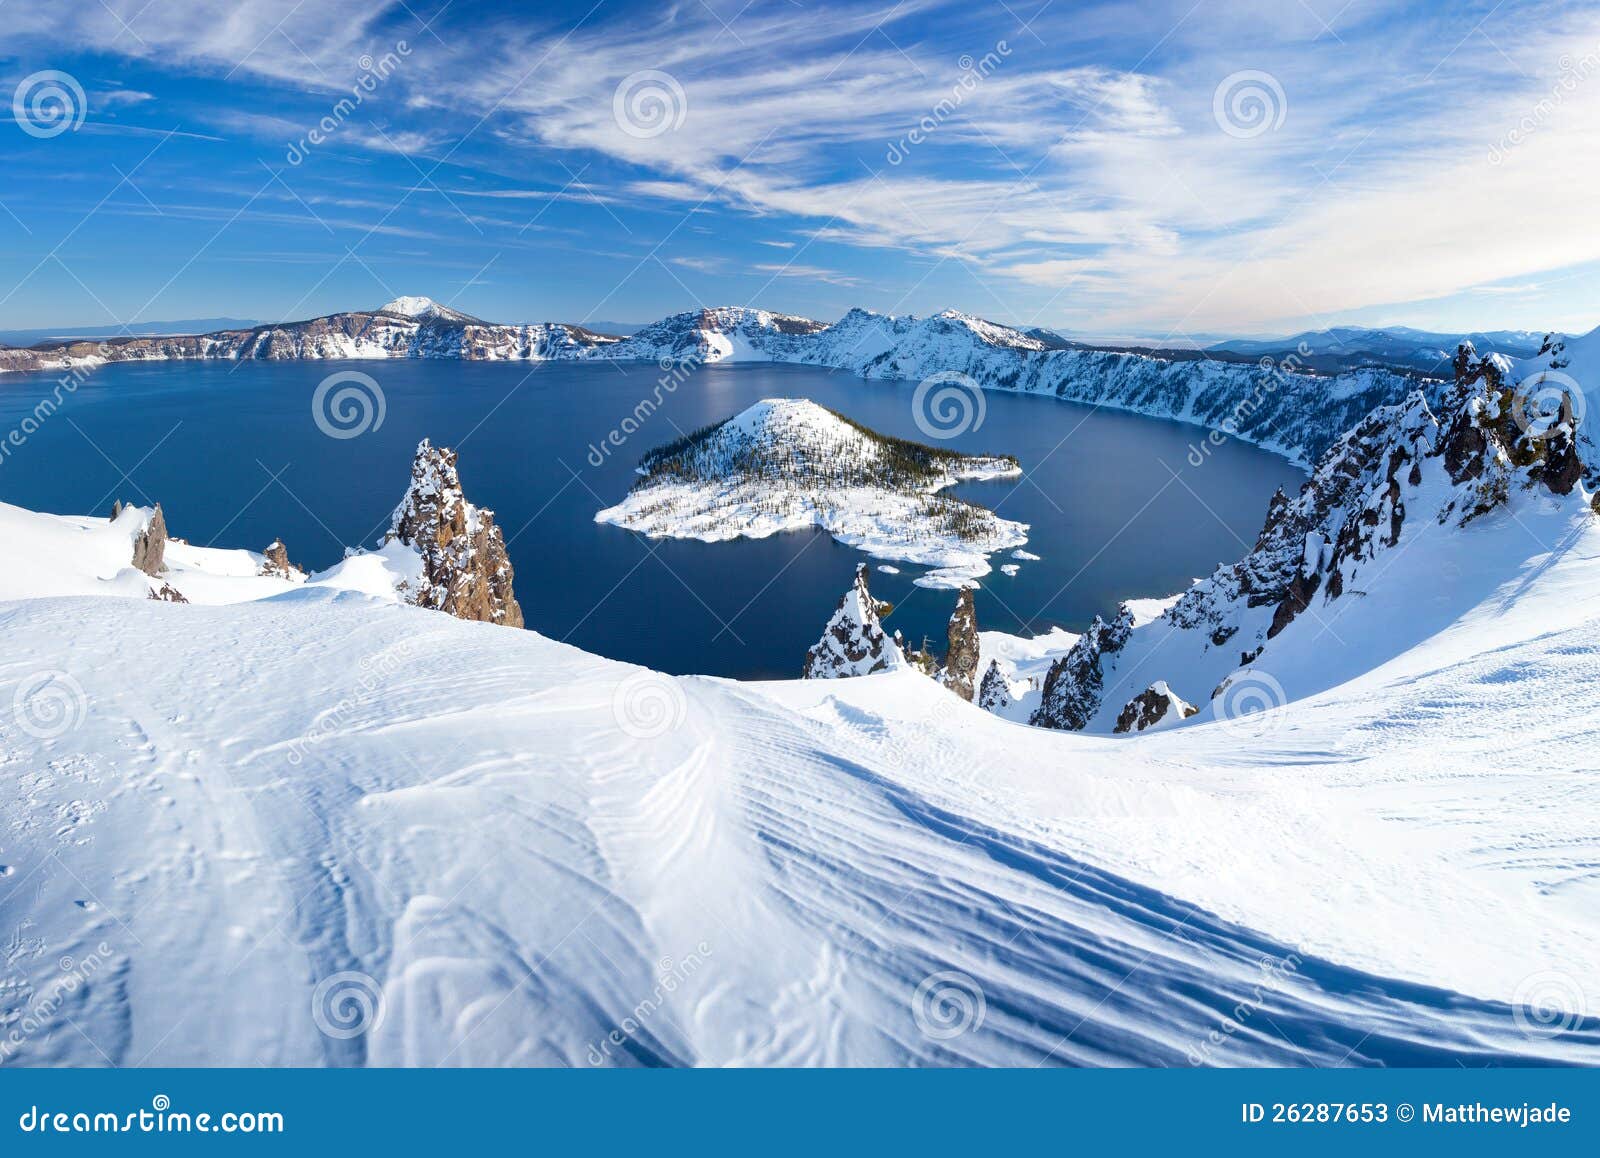 winter scene at crater lake volcano